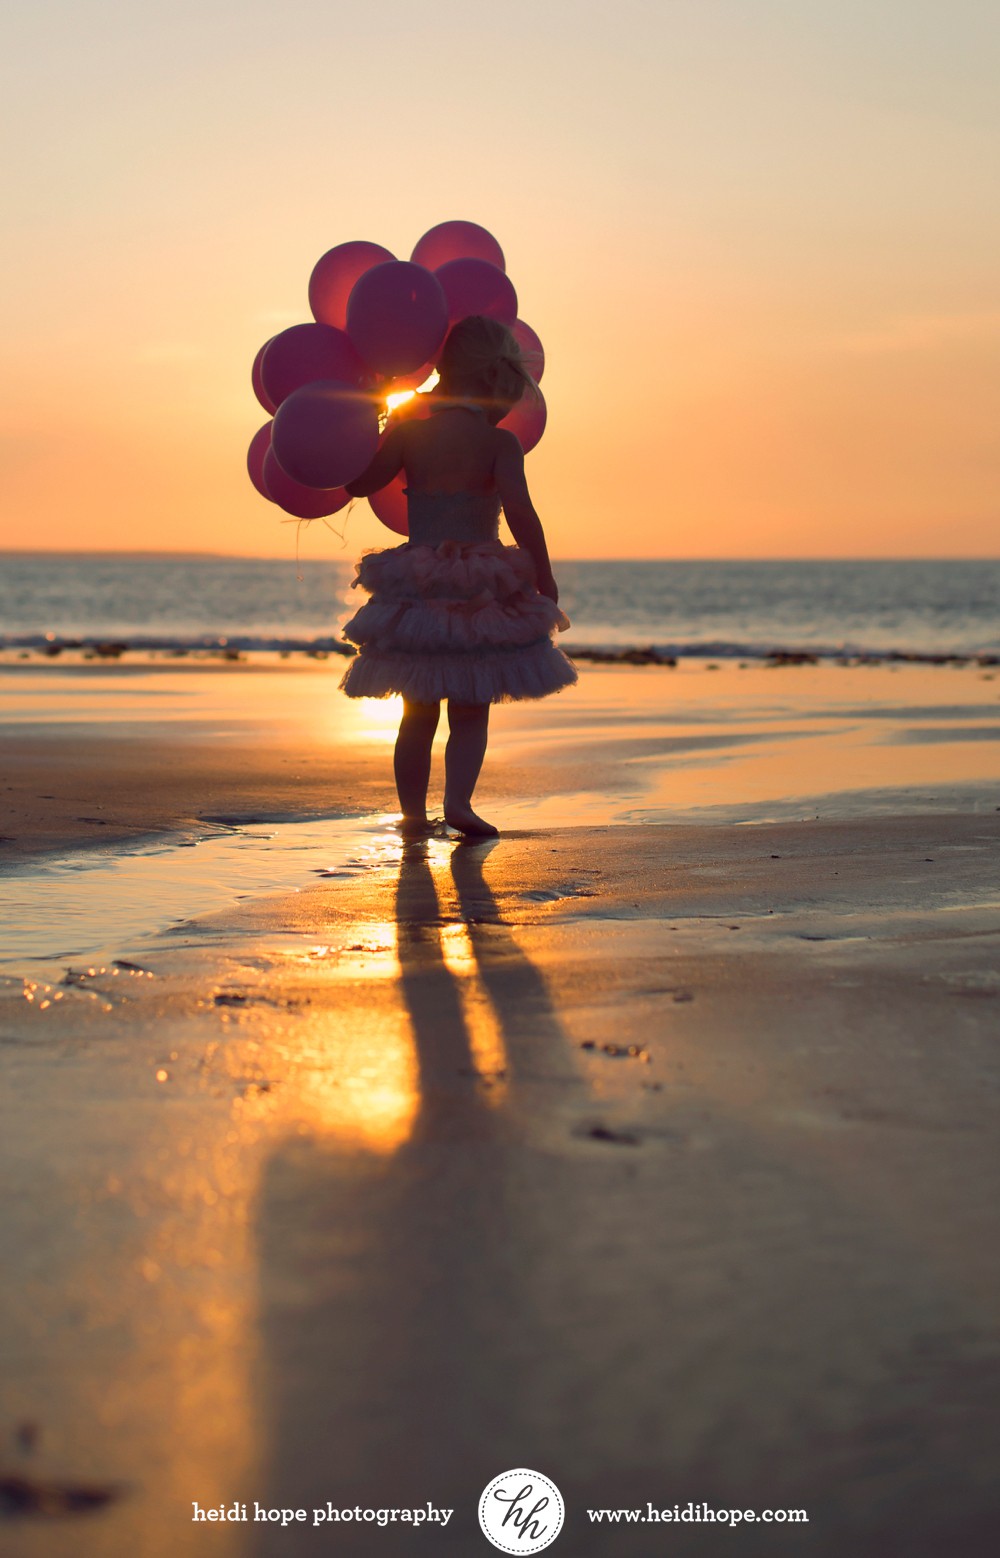 sunrise beach portrait of girl with balloons #heidihopephotography